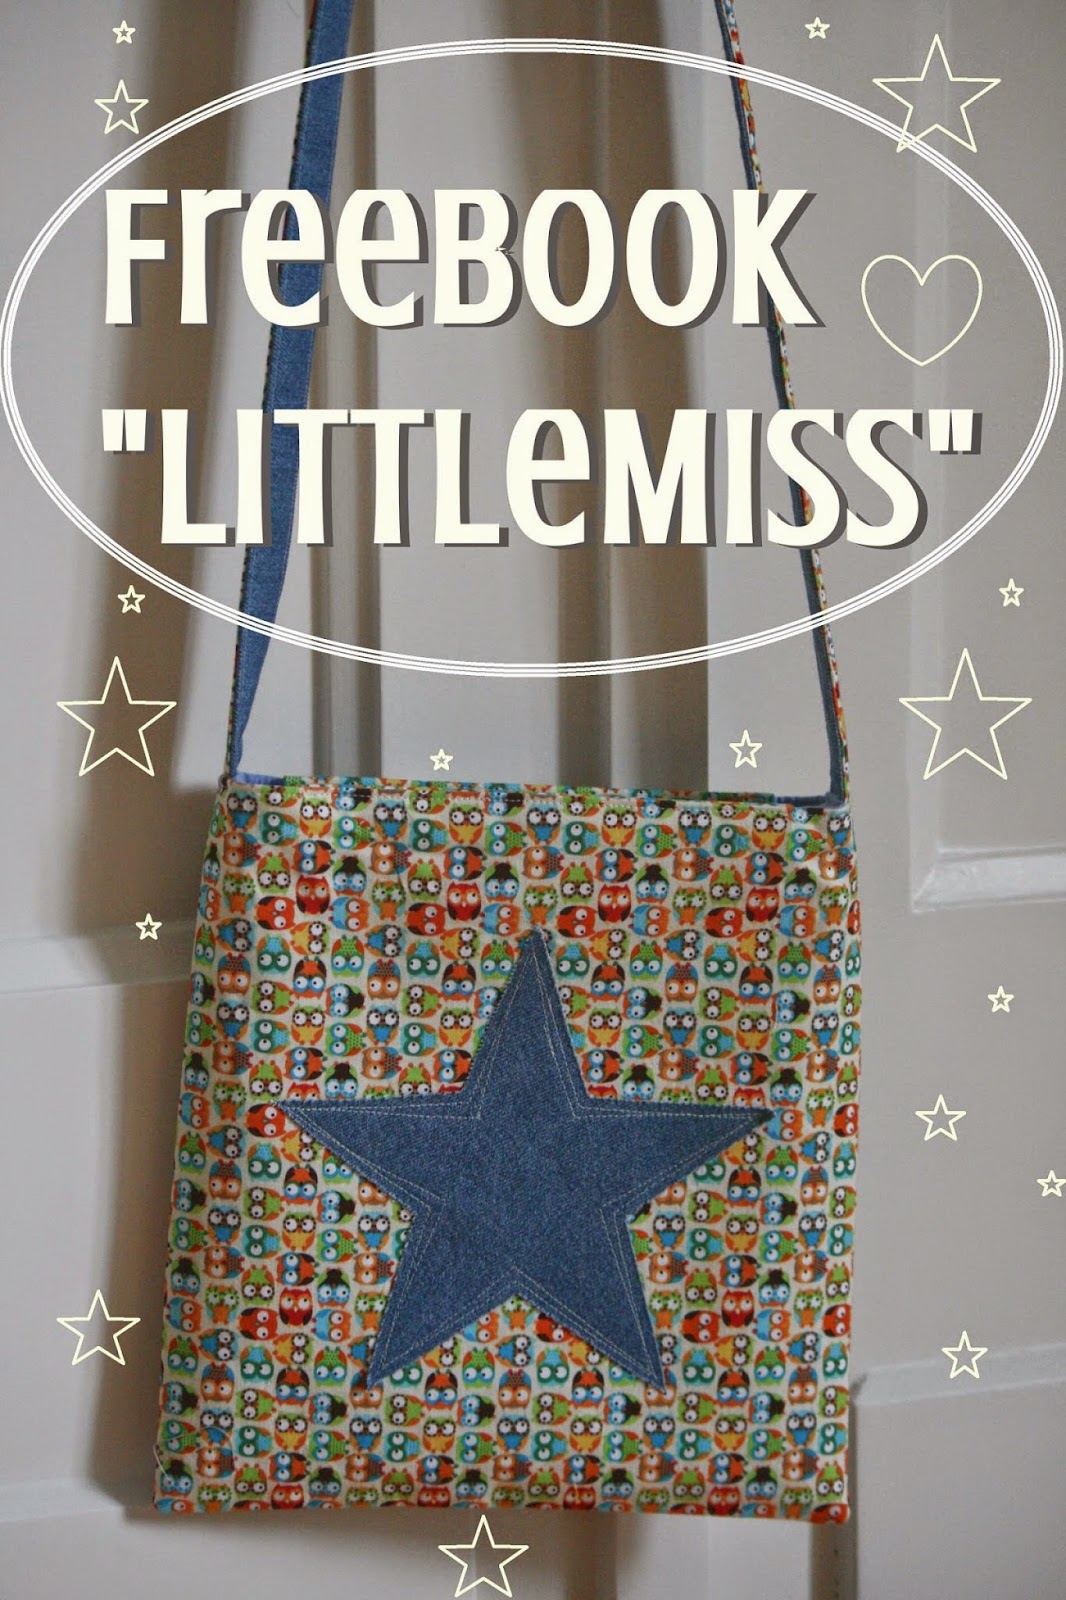 Freebook "LittleMiss"